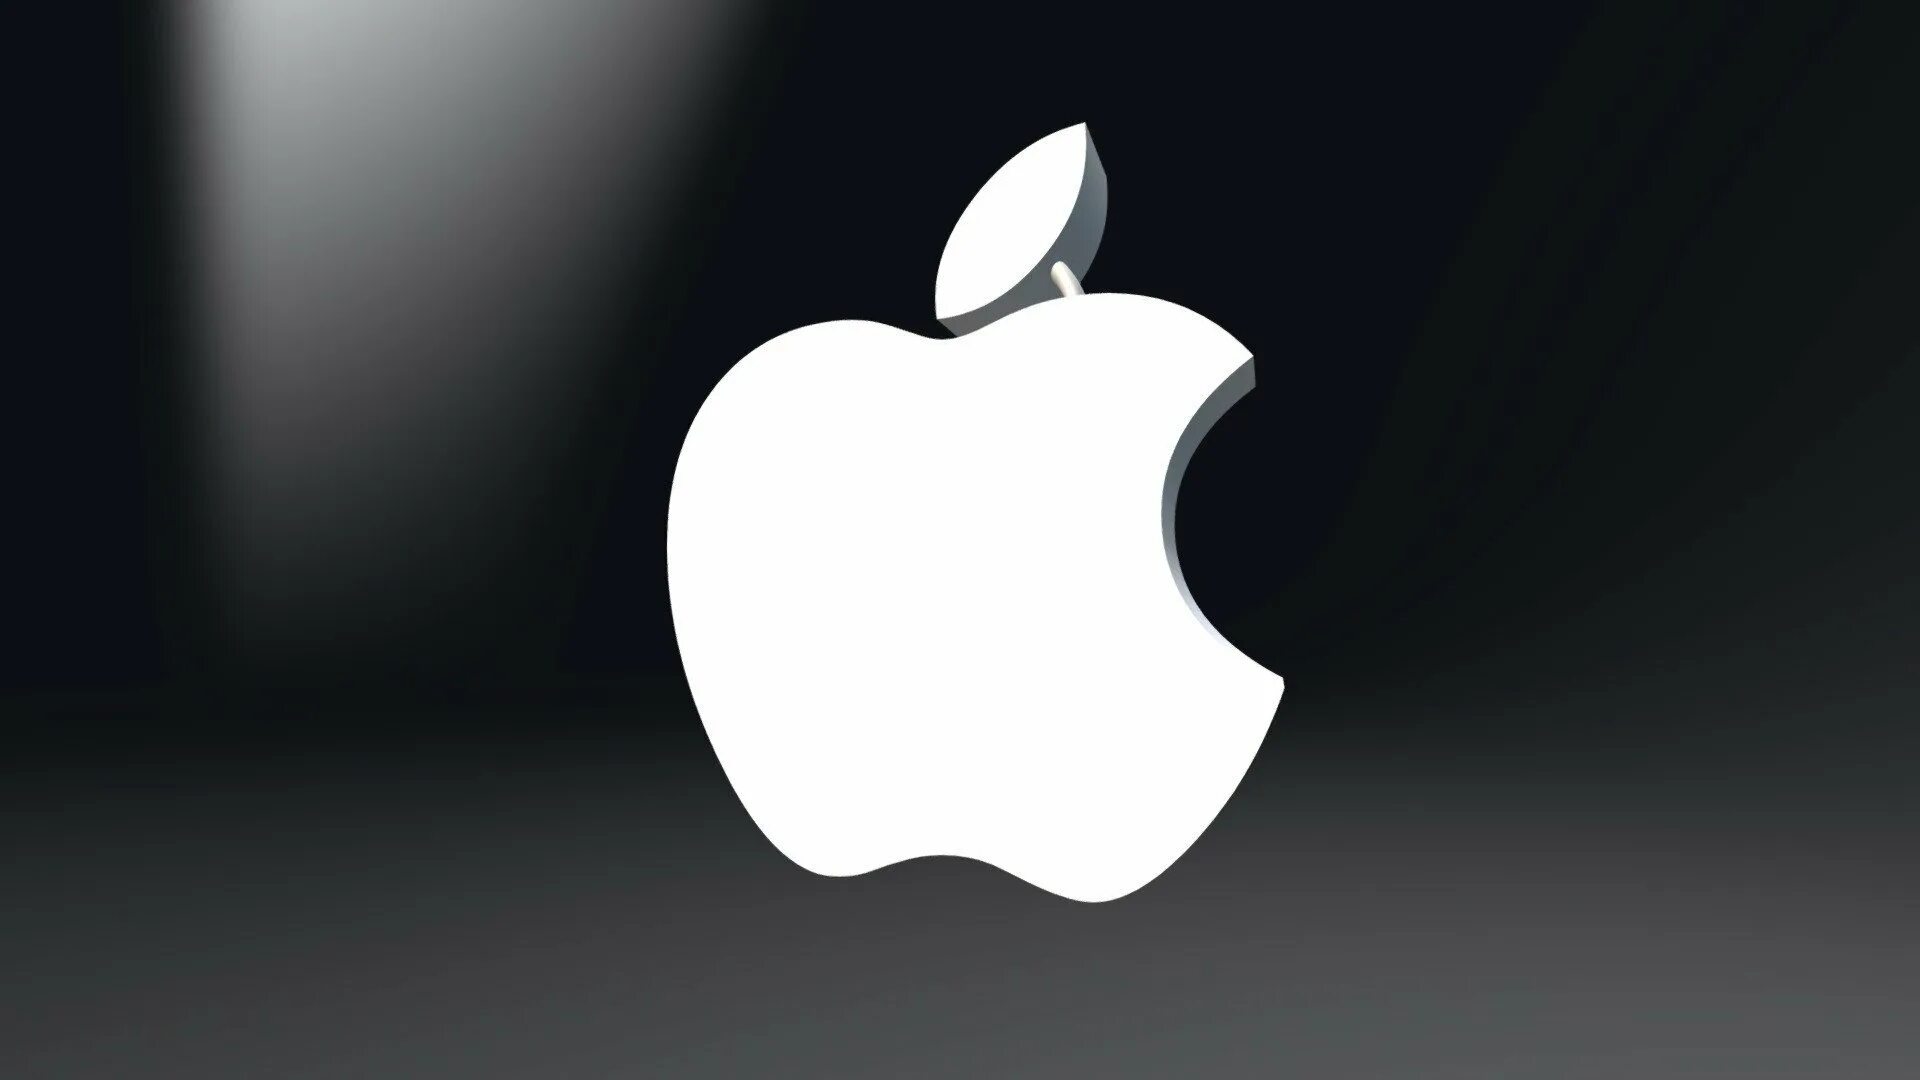 Обои на айфон яблоко. Товарный знак Эппл яблоко. Айфон Аппле логотип. Эпл лого 2021. АПЛ айфон фирма.